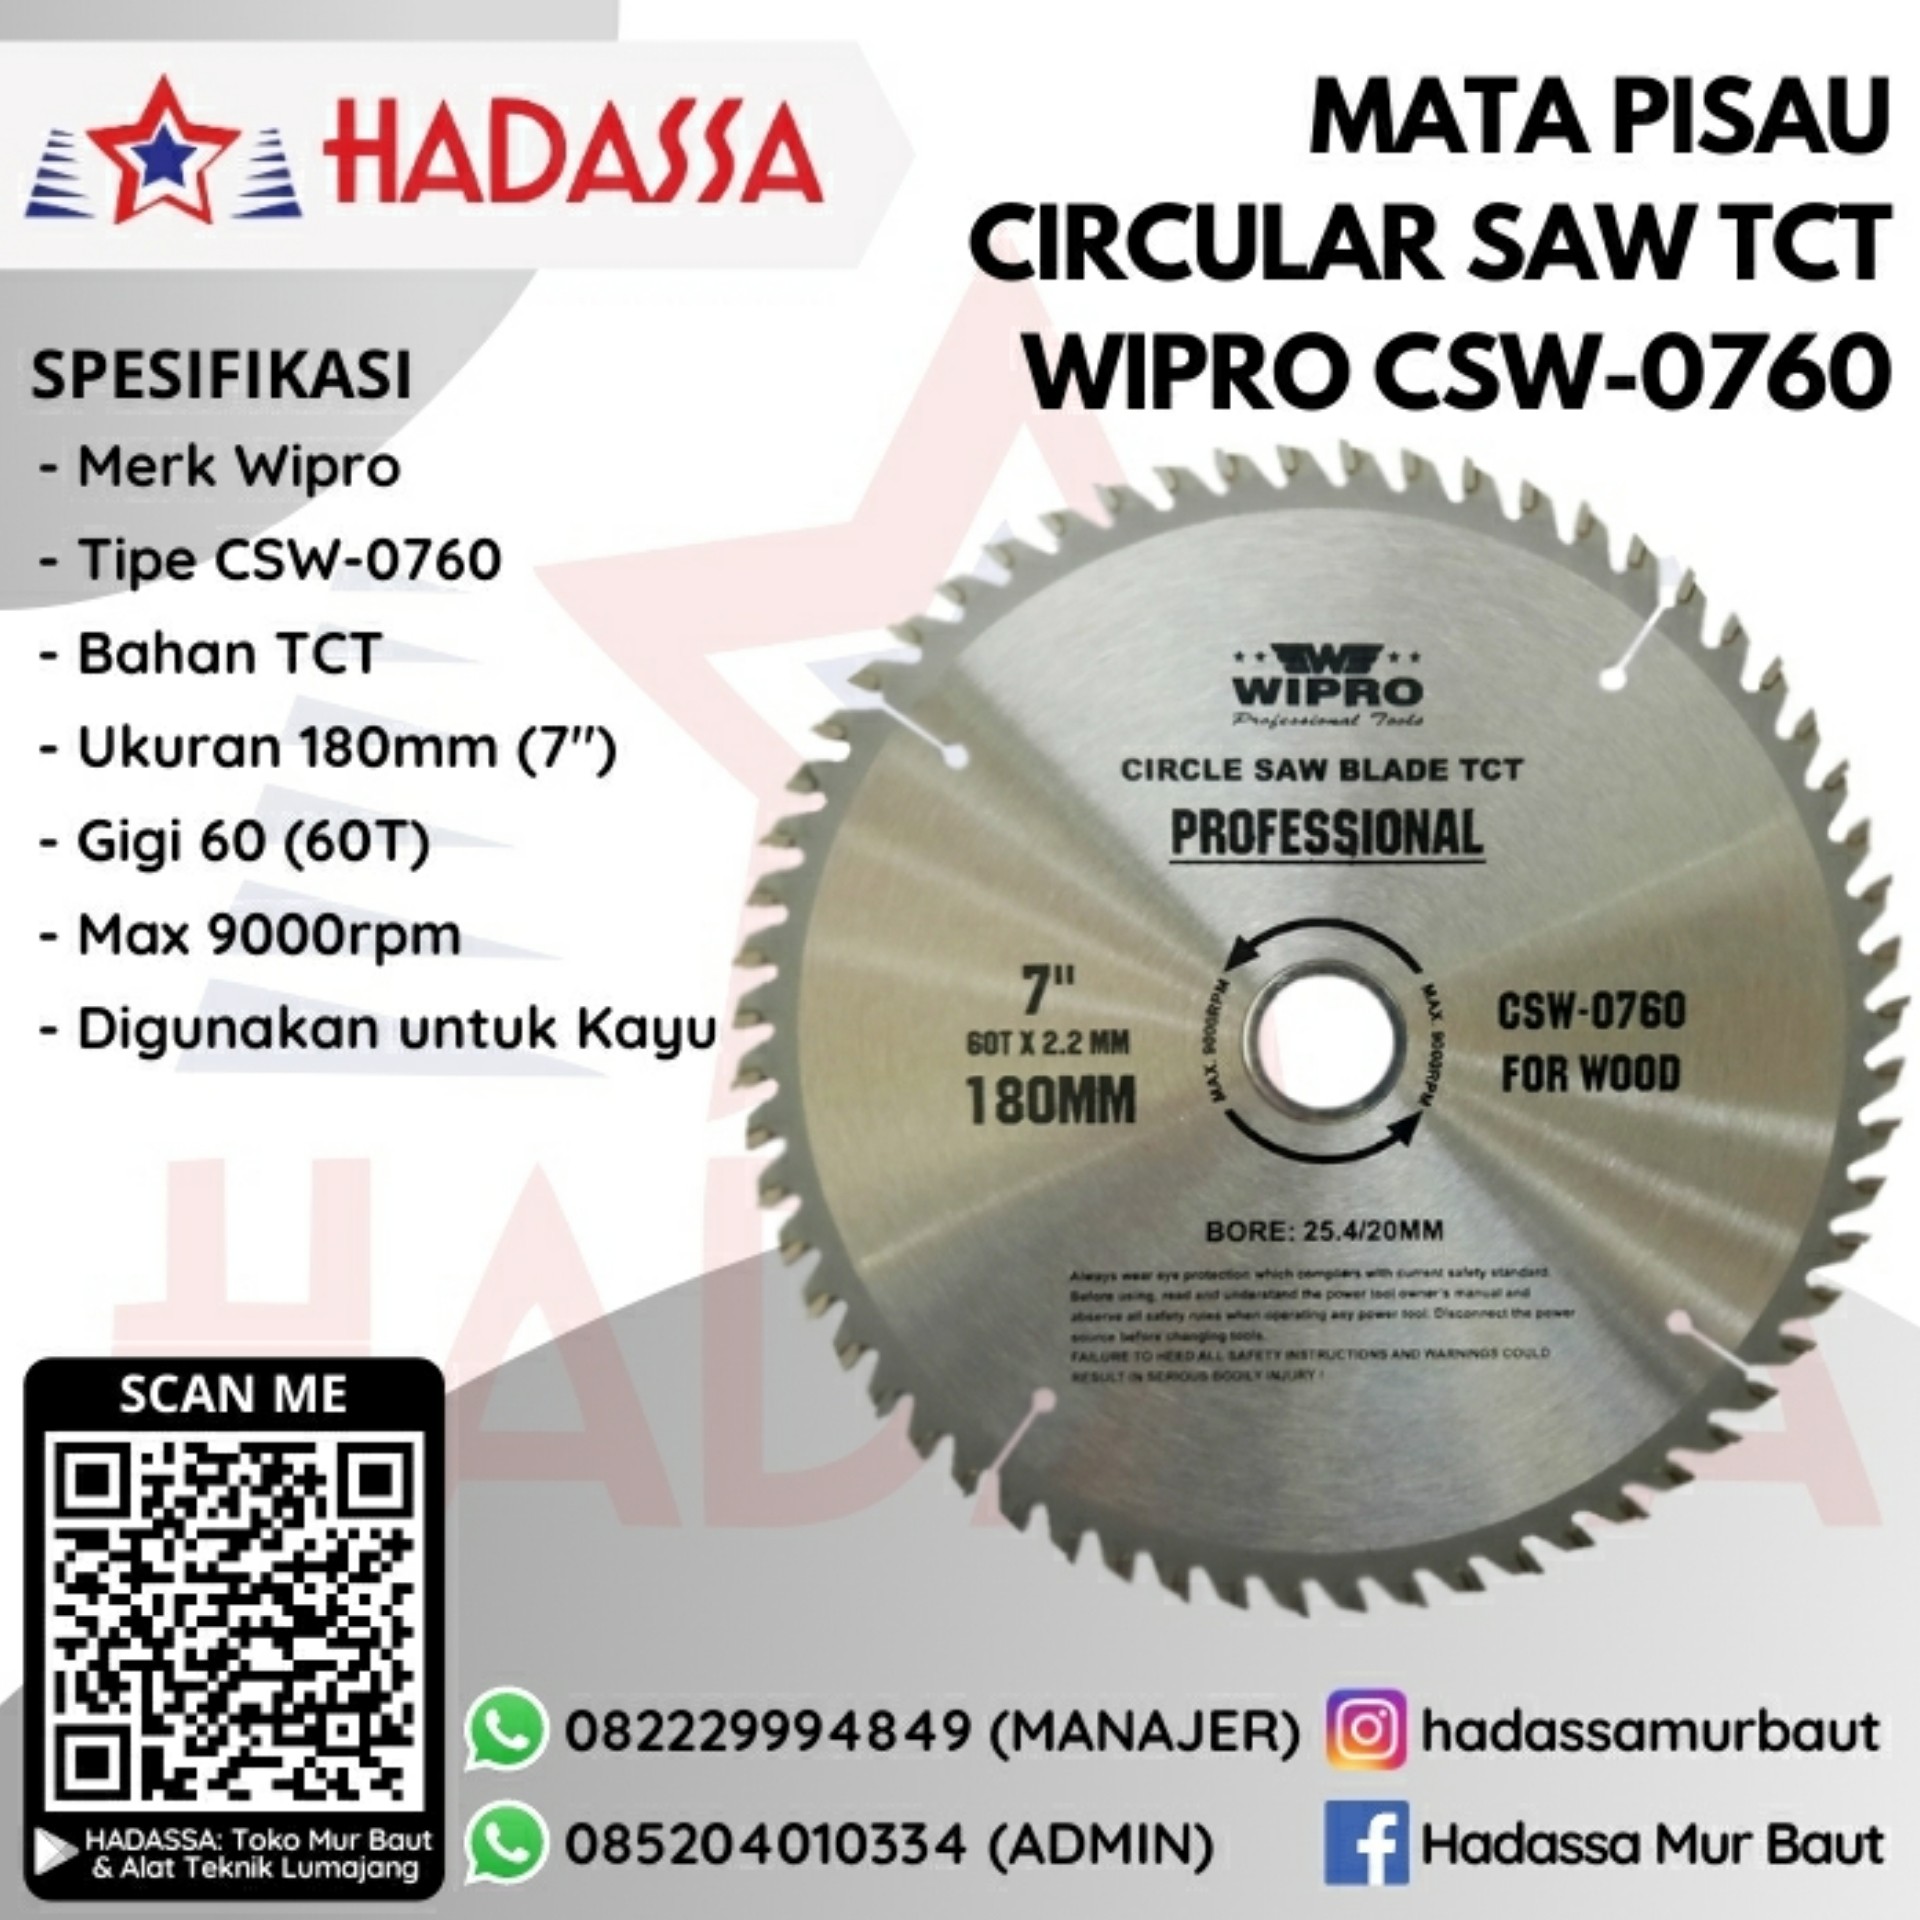 Mata Pisau Circular Saw TCT Wipro CSW-0760